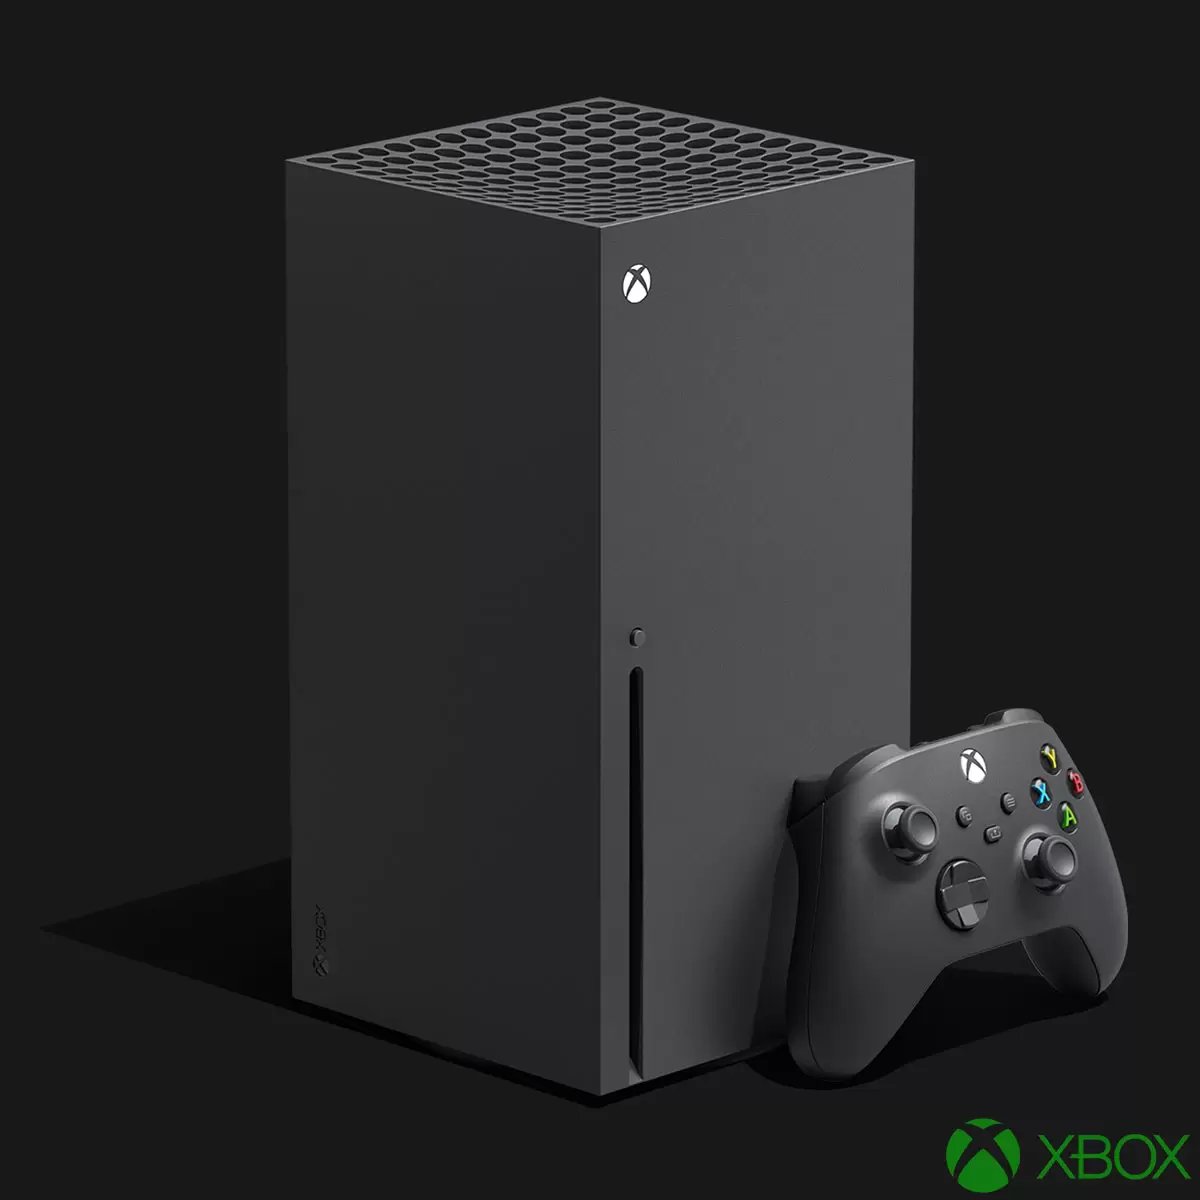 🎮 Xbox Series X 1TB Console now just £359.98 at Costco: stock-checker.com/deals/xbox-ser… #XboxSeriesX #CostcoDeal #GamingConsole